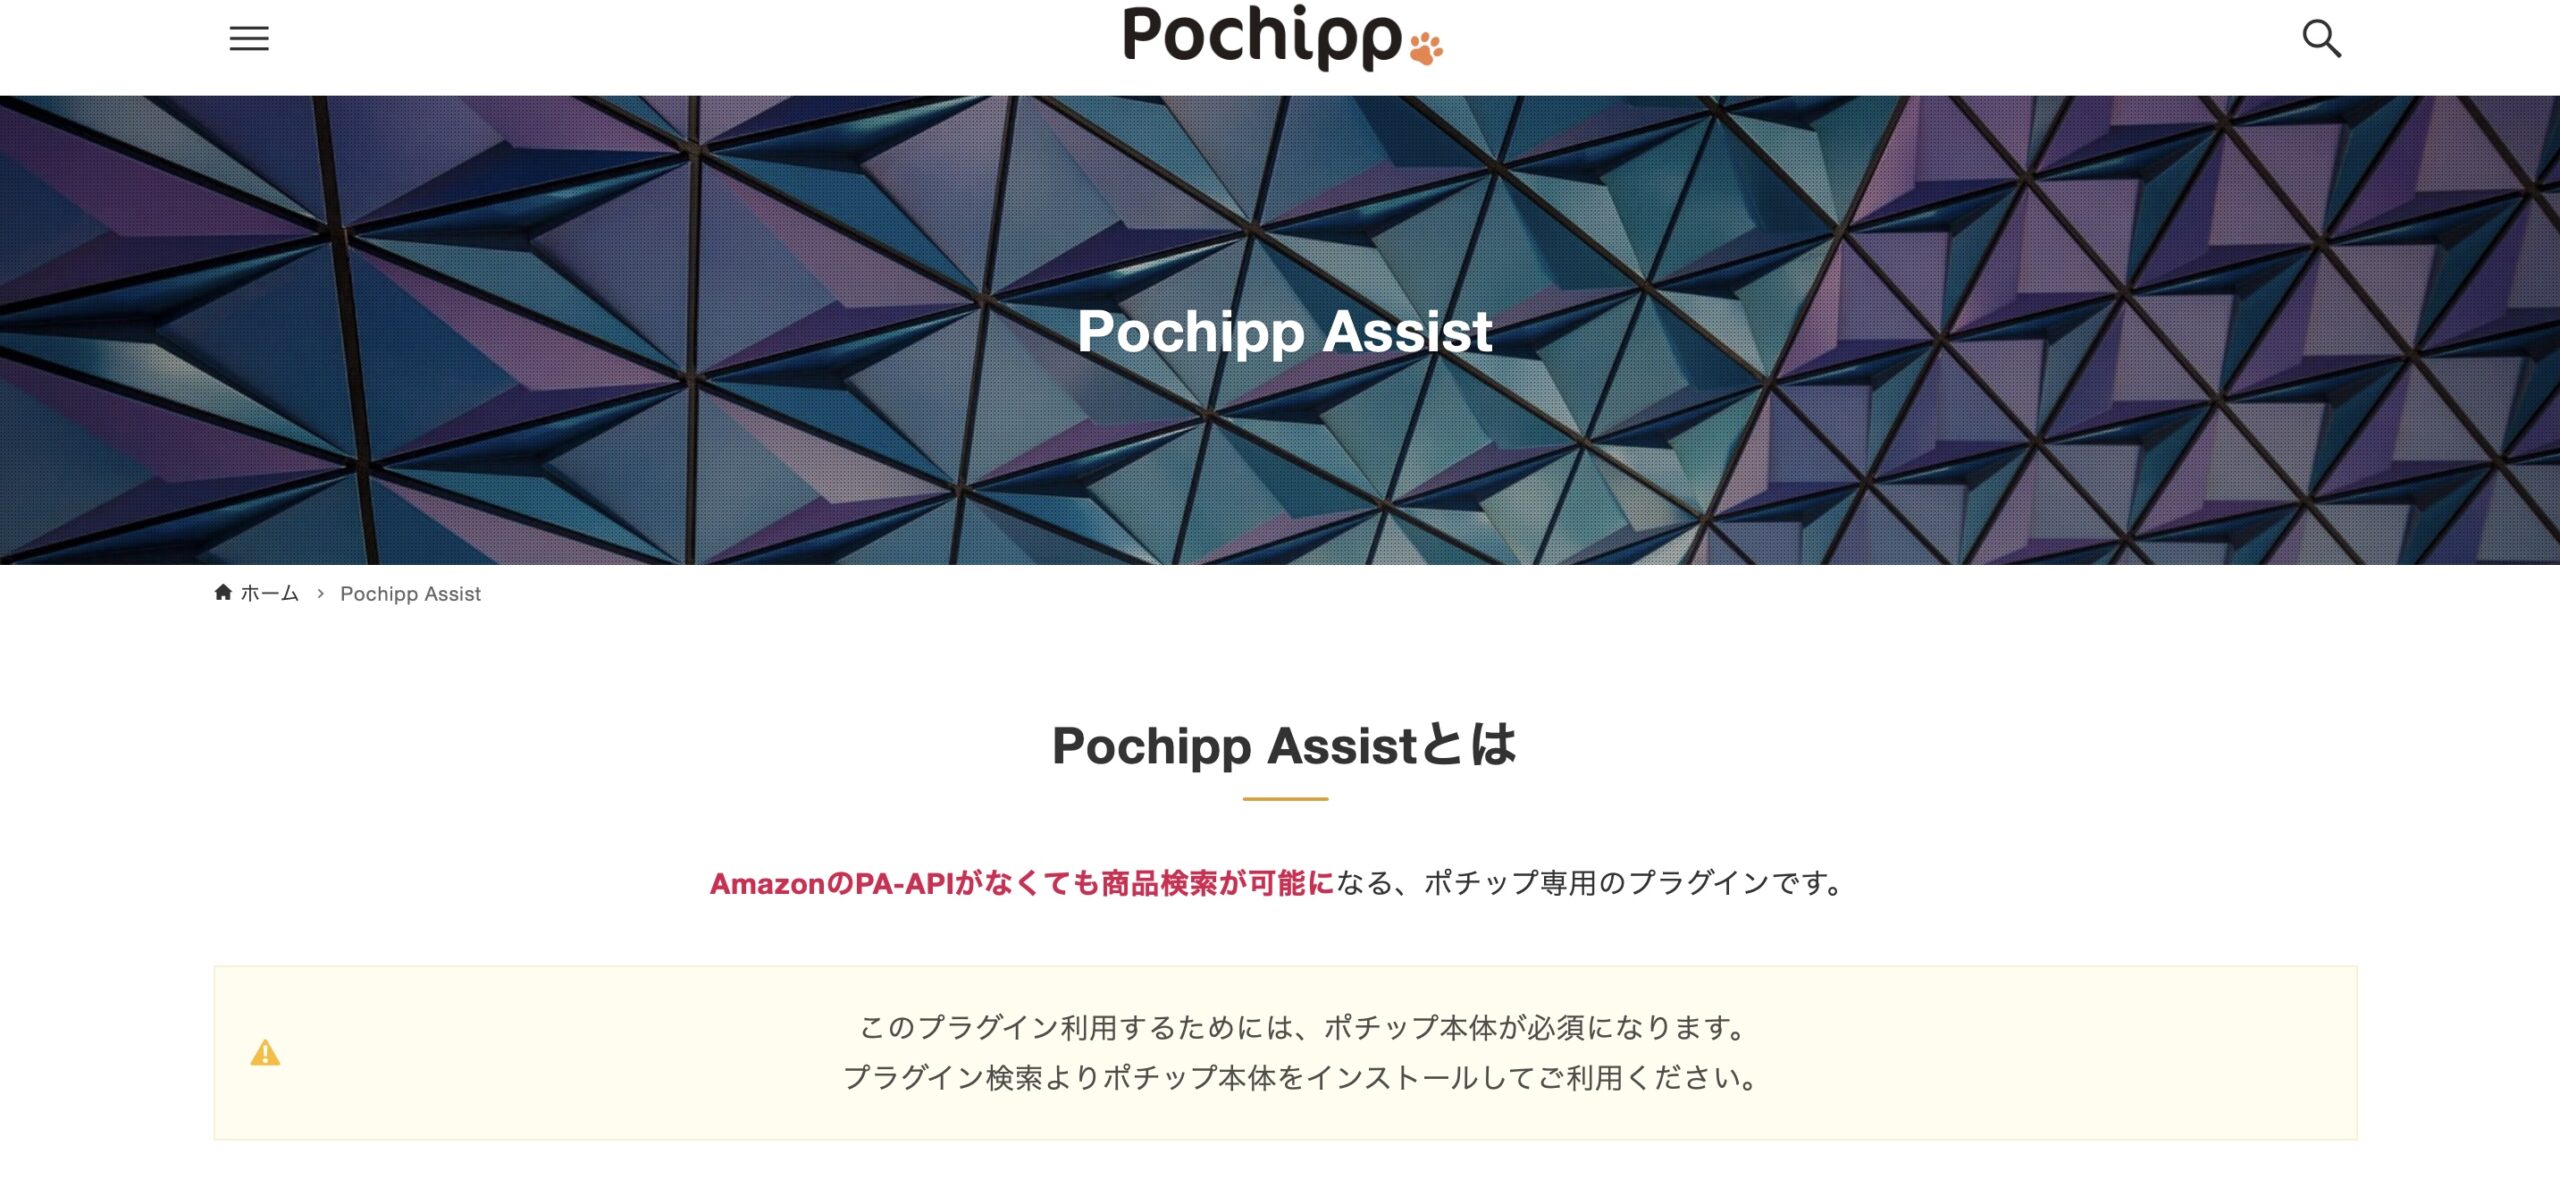 Pchipp Assist公式